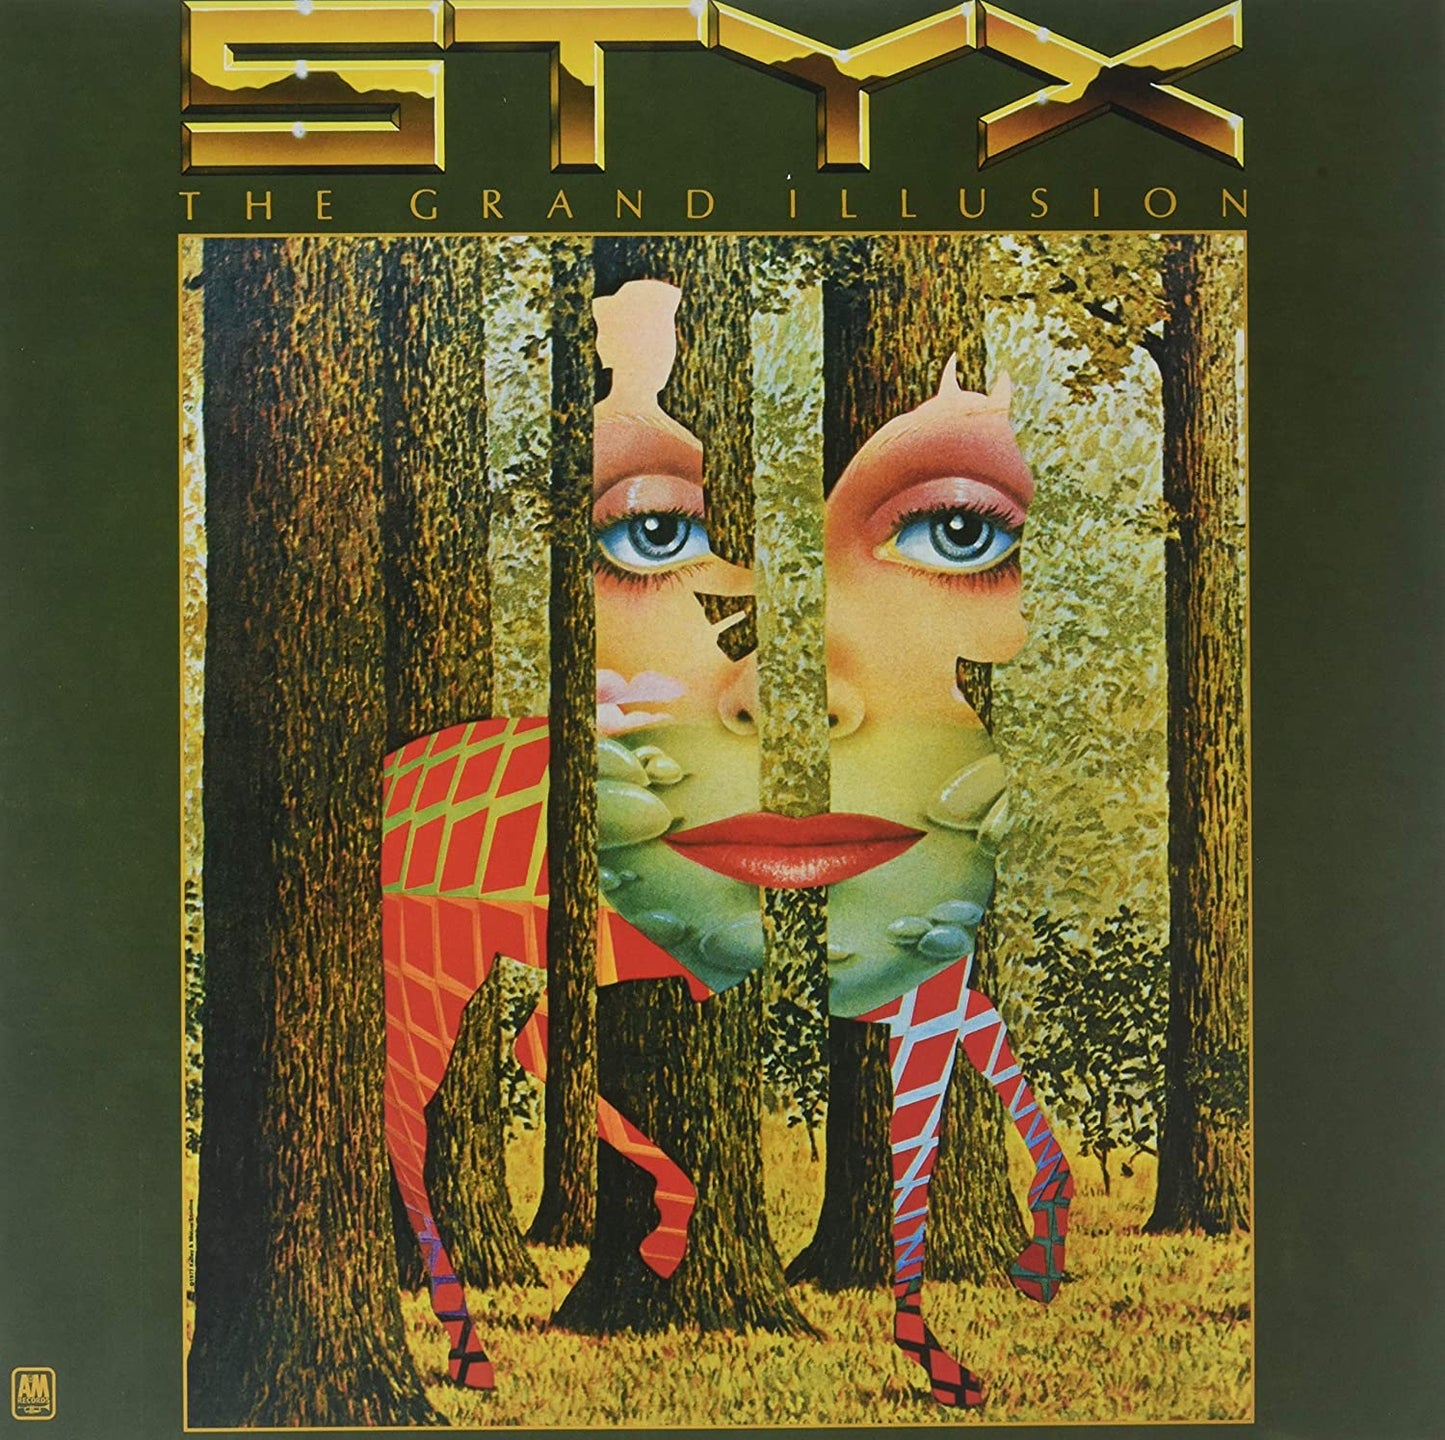 Styx - Grand Illusion (Limited Edition, Translucent Green Vinyl) (LP)